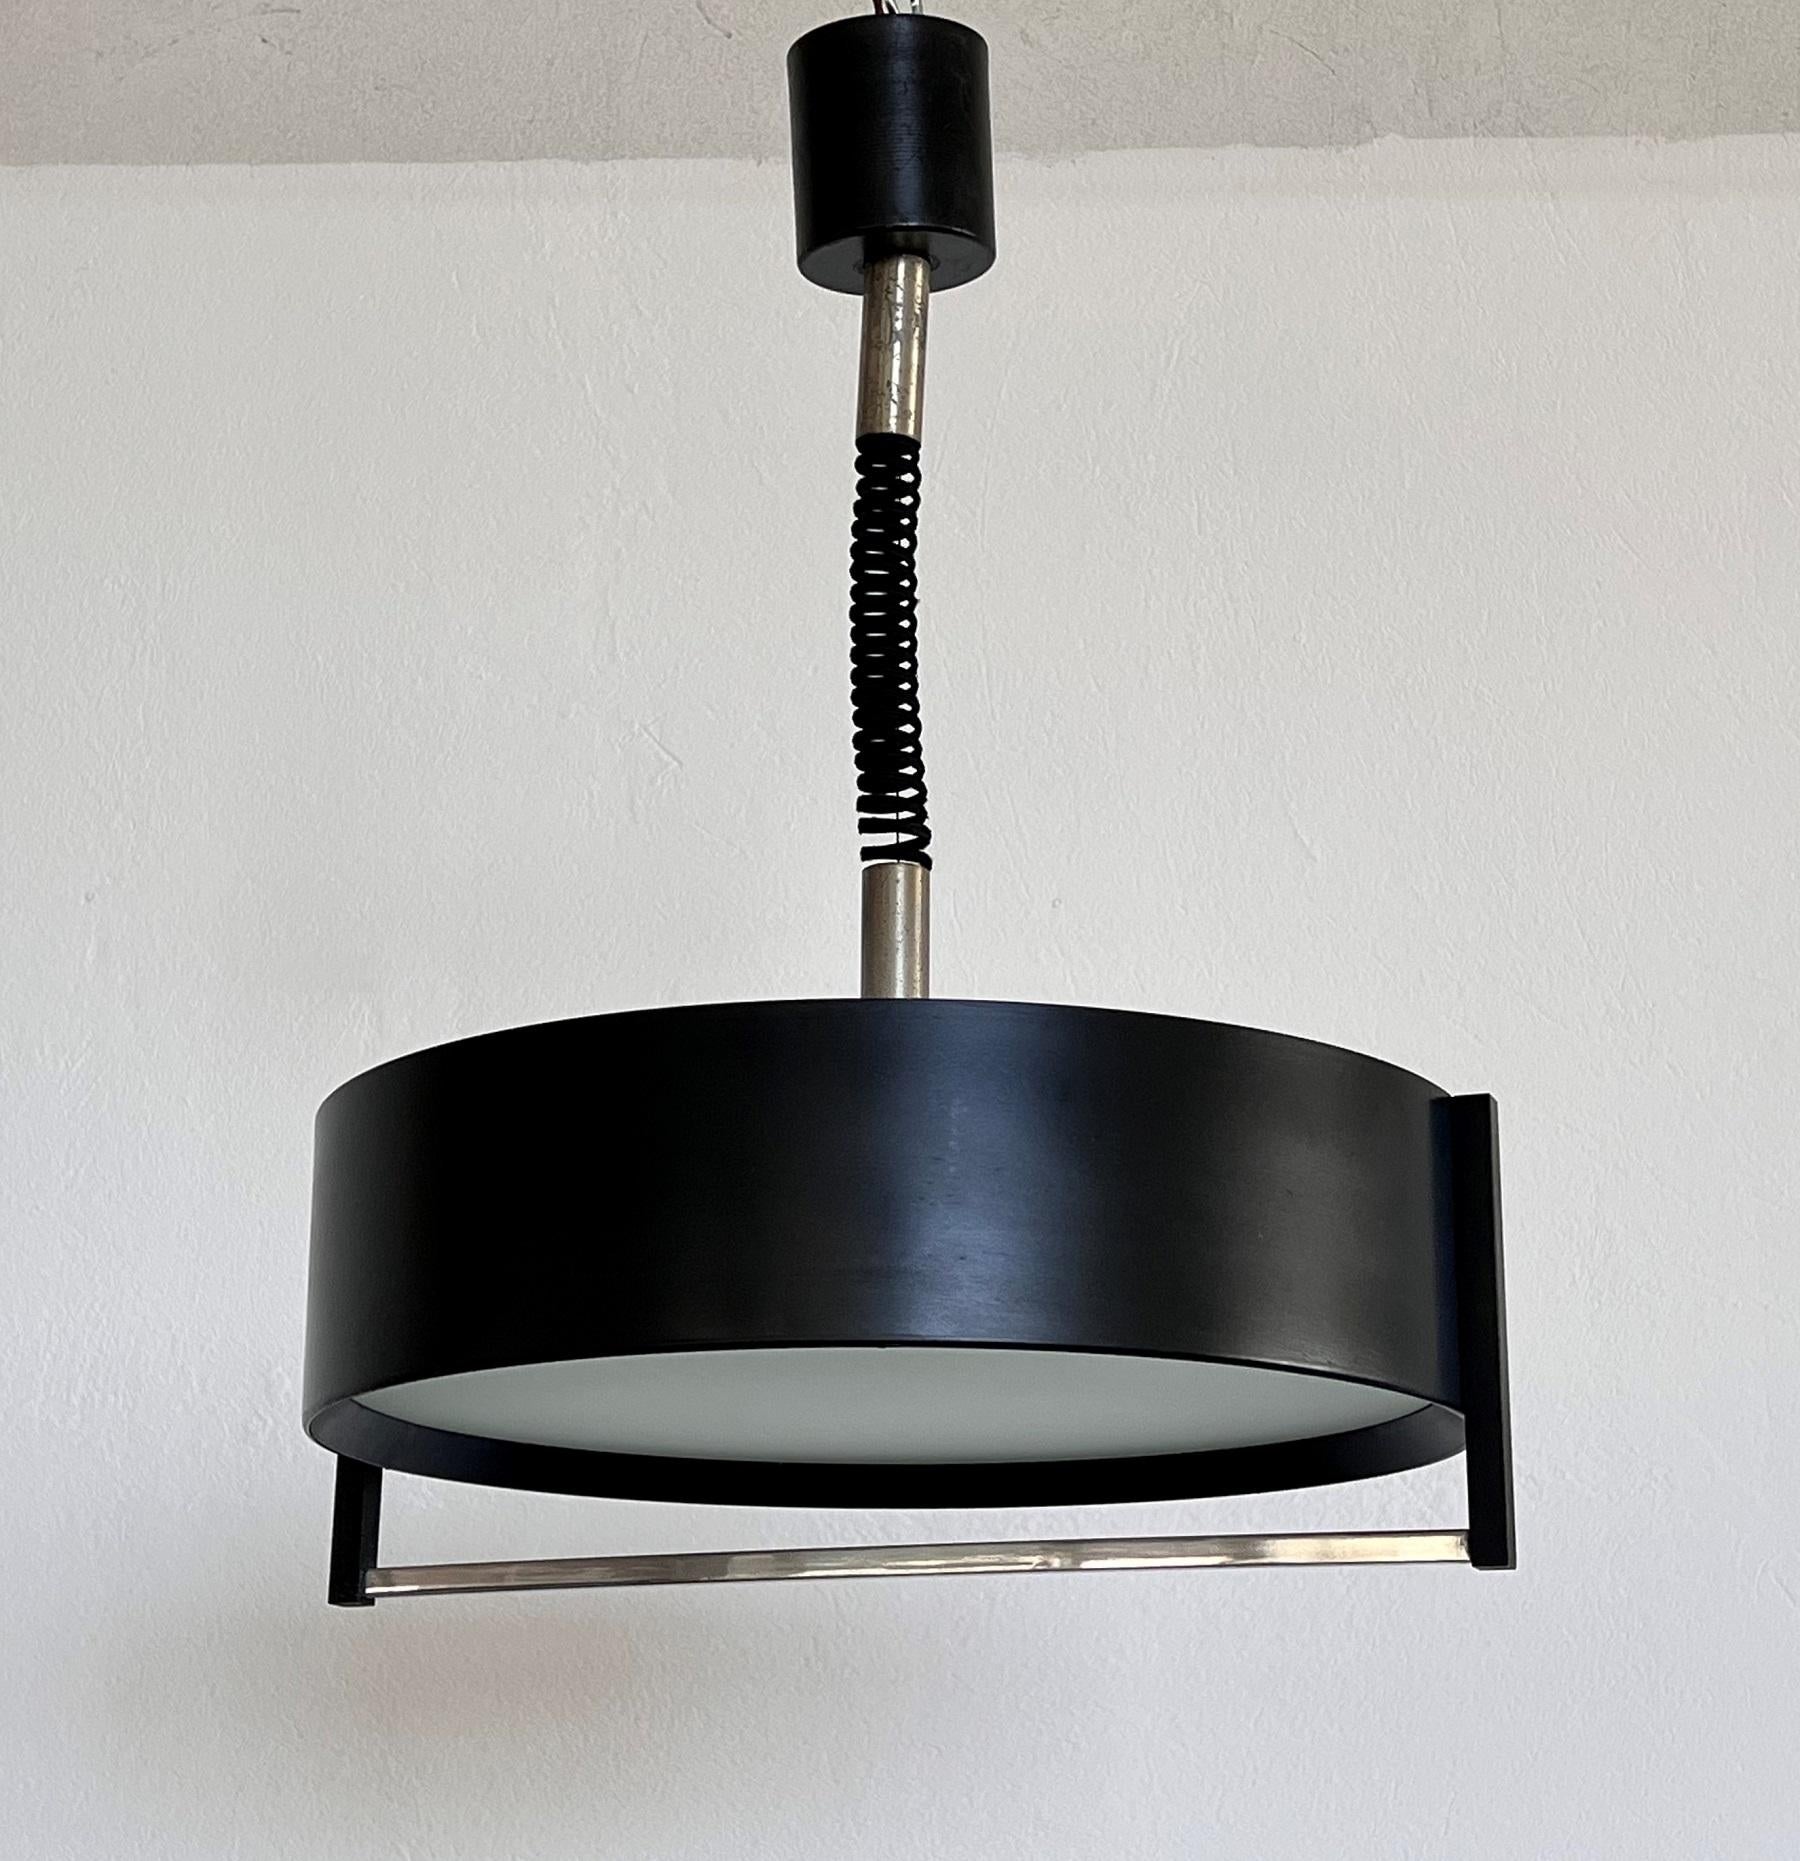 Italian Stilnovo Pendant Lamp in Metal and Glass, 1960s For Sale 5